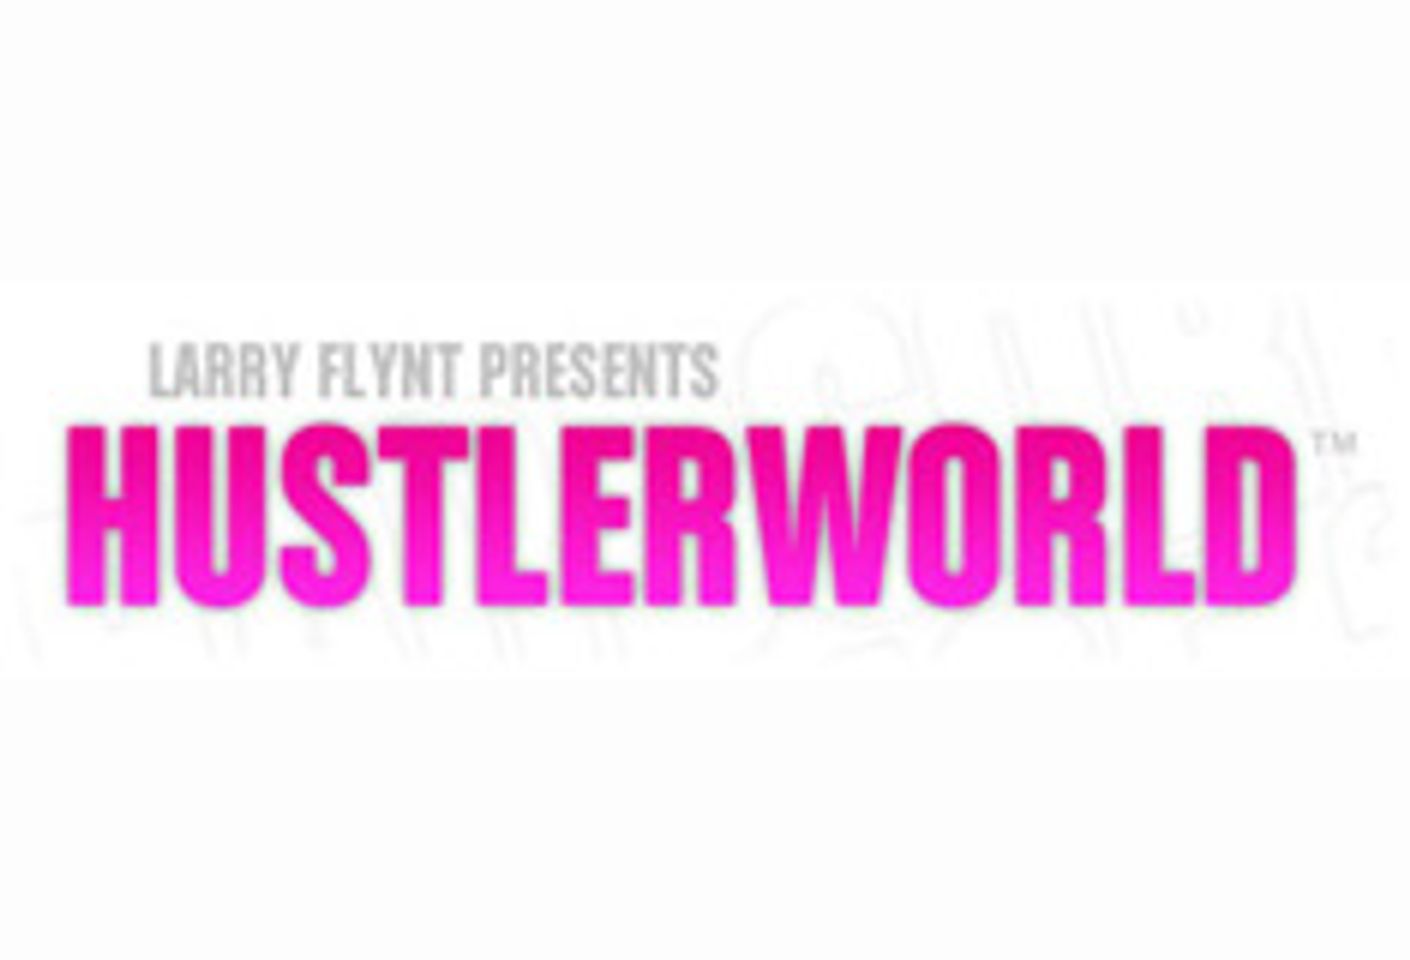 HustlerWorld.com Launches